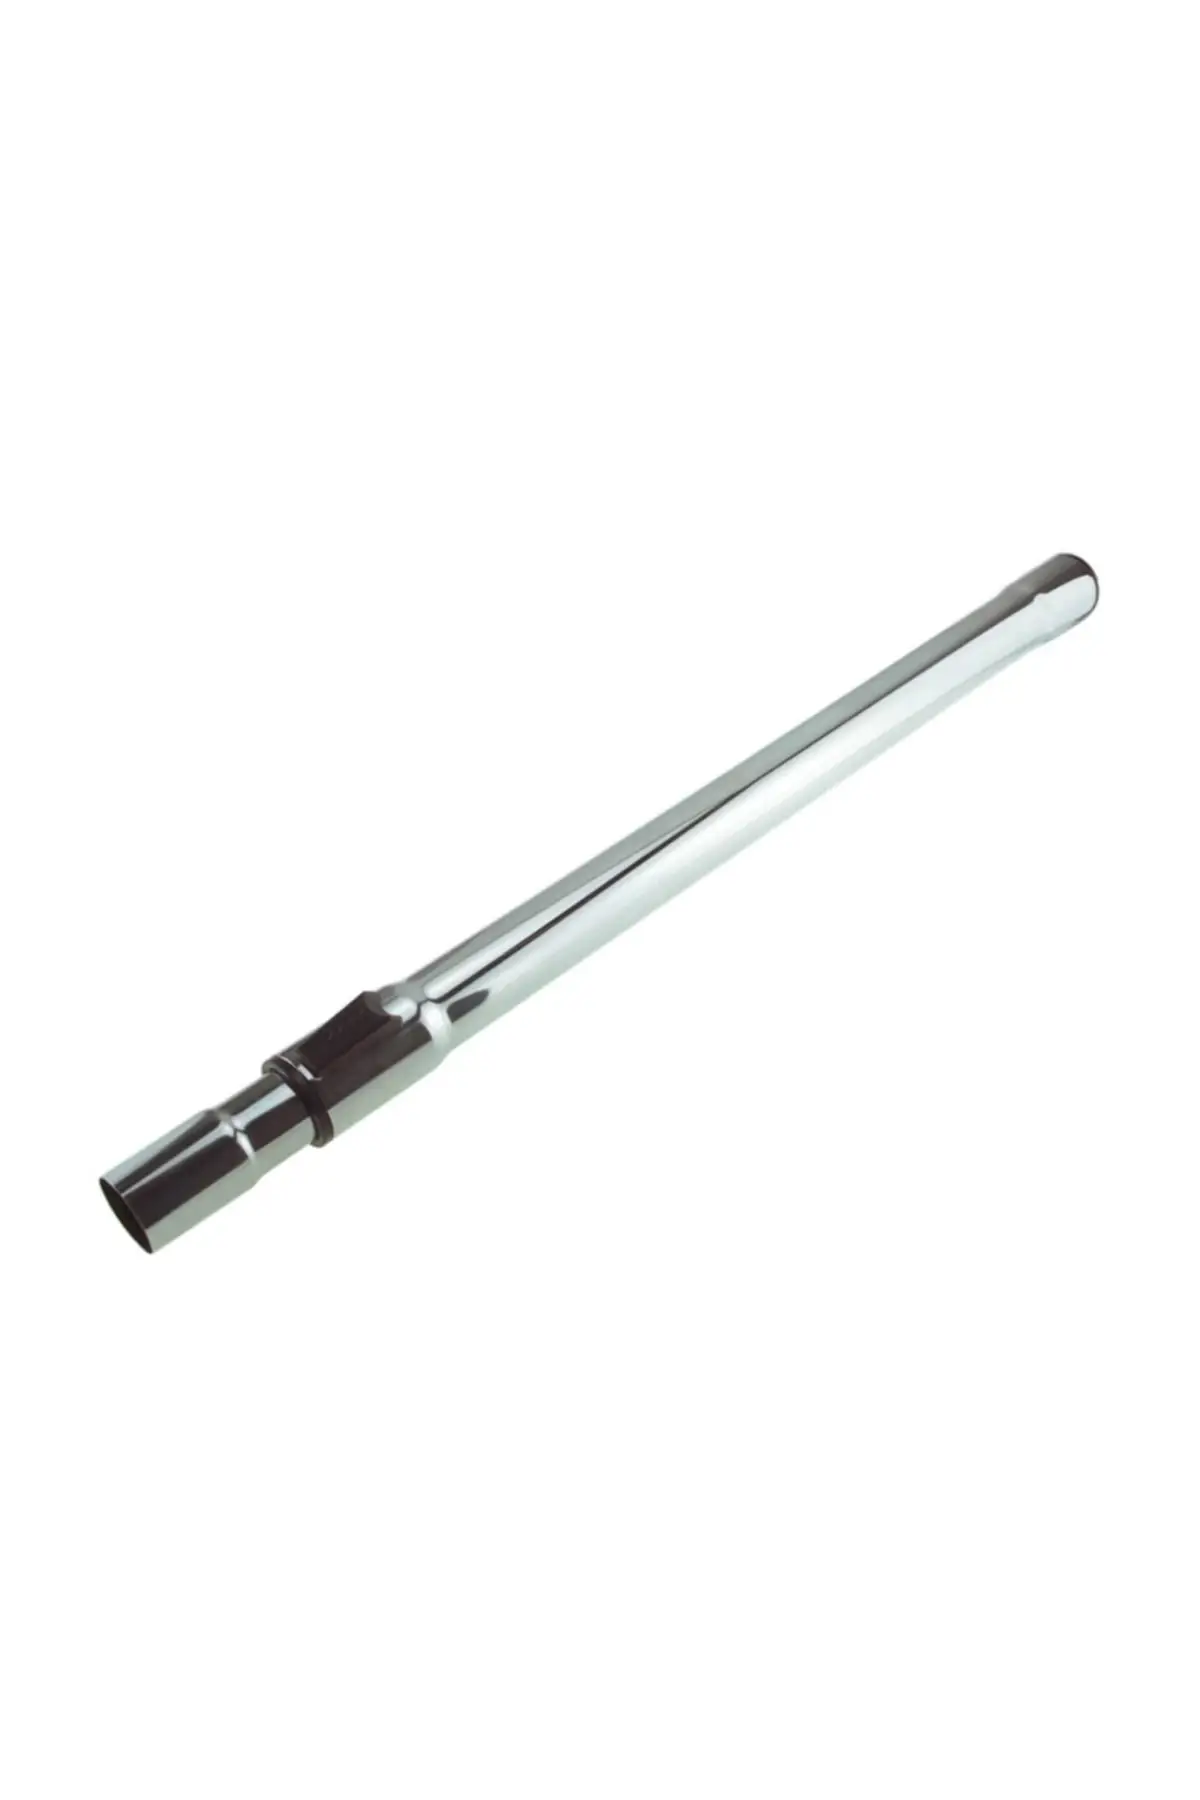 

MHK Parts Bks 5585 Compatible Telescopic Vacuum Cleaner Pipe